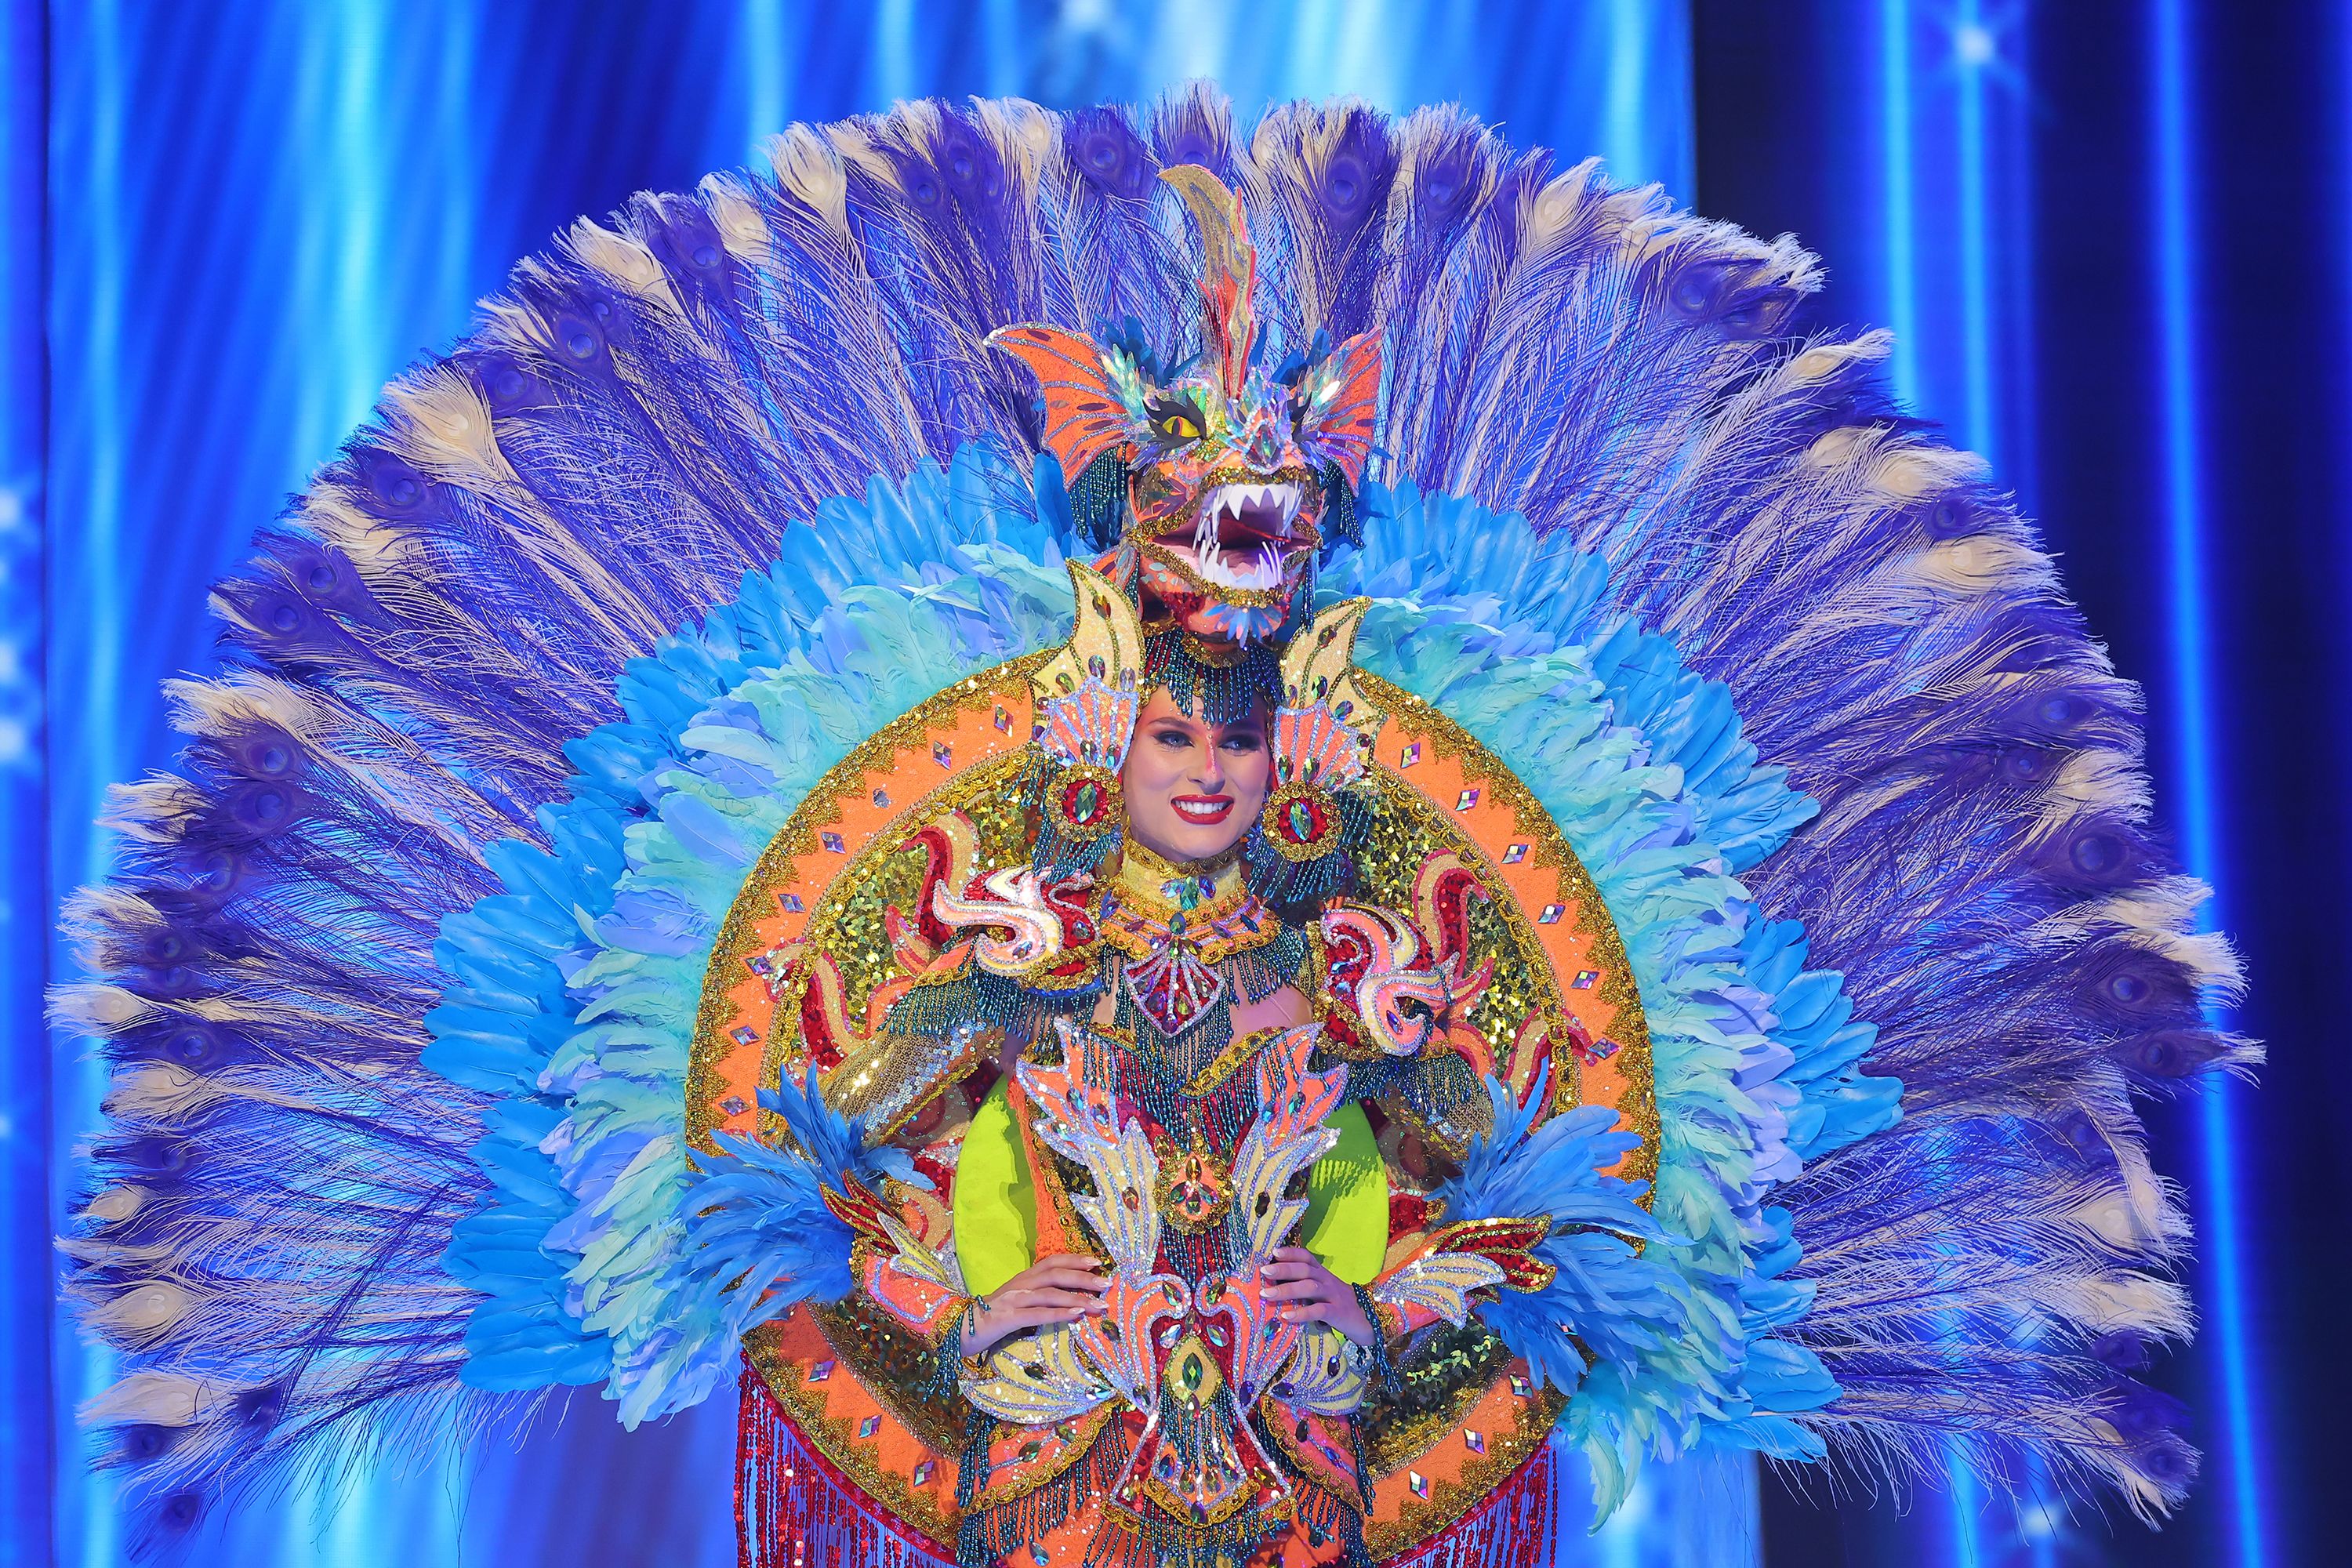 Top 10 unique costumes of Miss Universe 2023 contestants